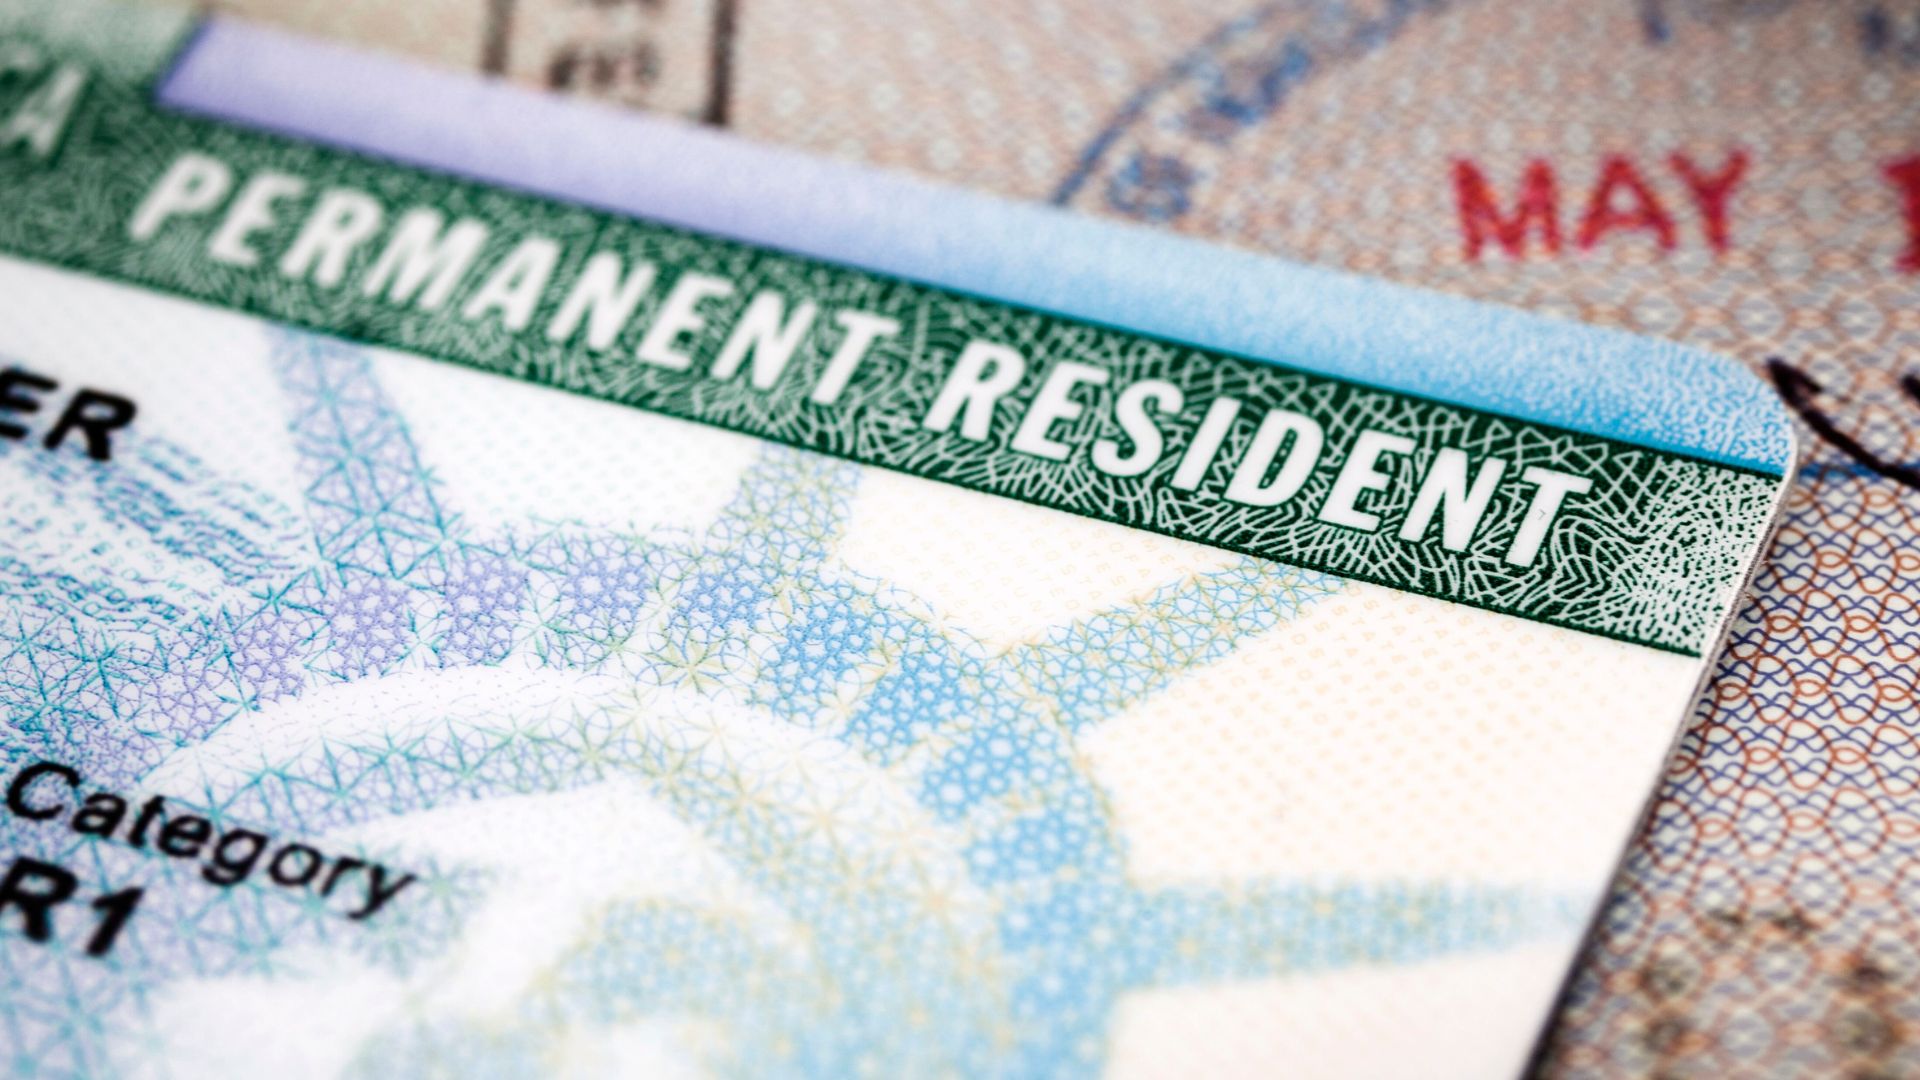 Con la visa EB-1 recibes la green card o residencia permanente. (Epoxydude/Getty Images)